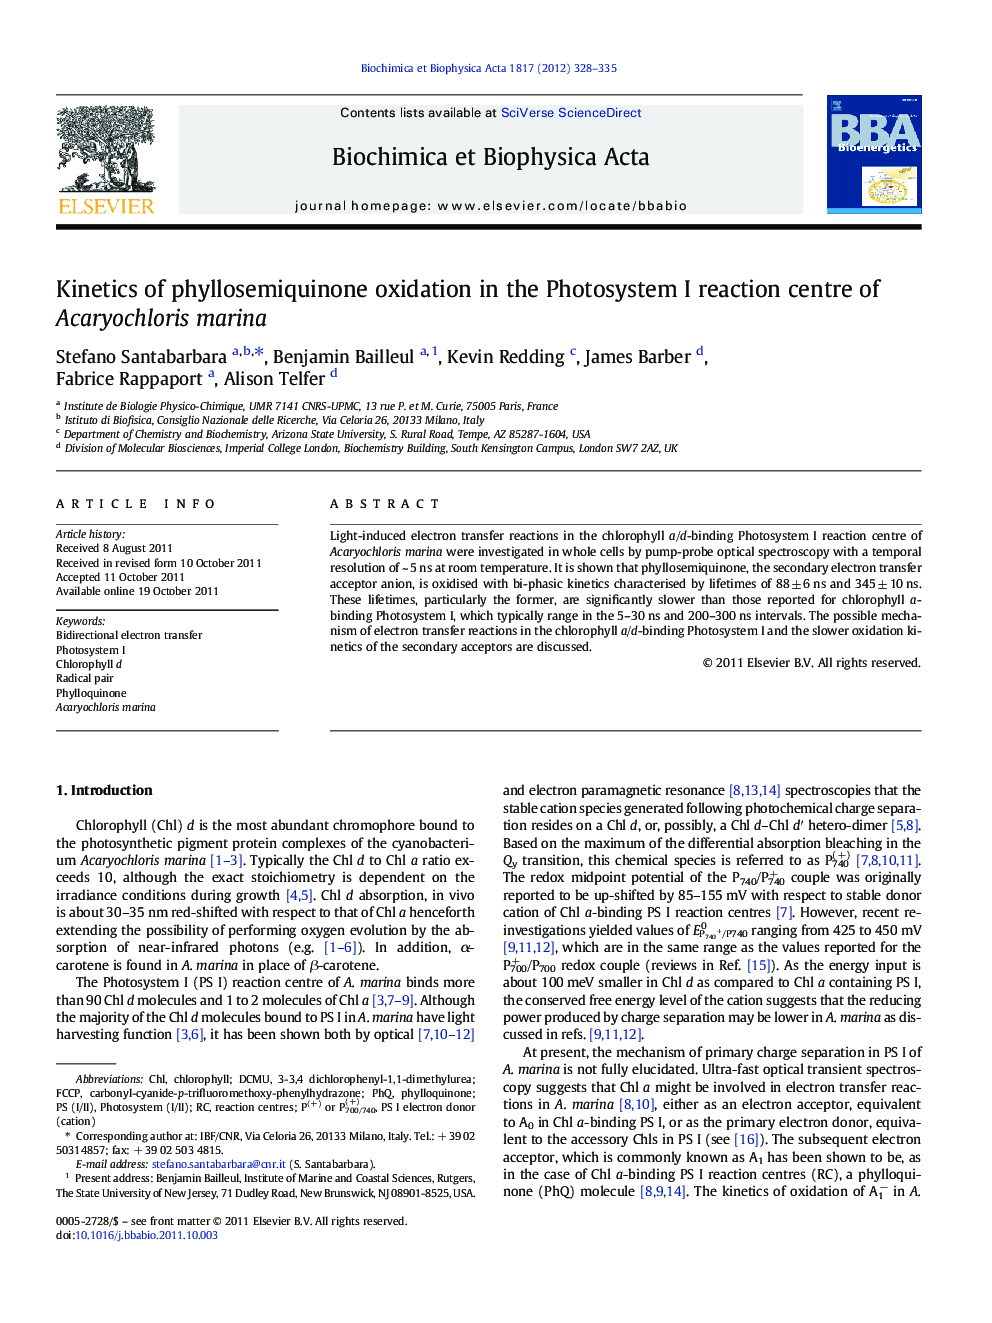 Kinetics of phyllosemiquinone oxidation in the Photosystem I reaction centre of Acaryochloris marina